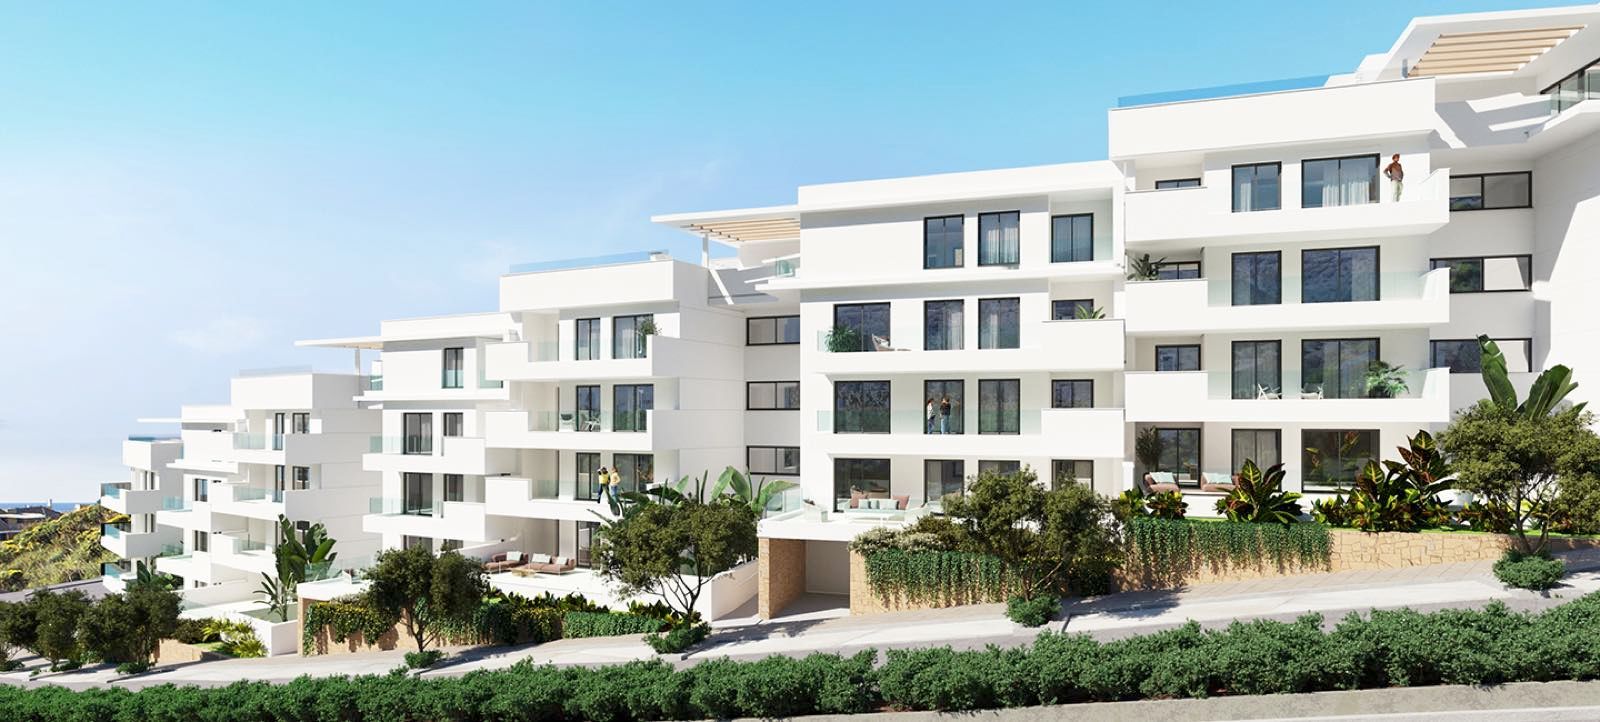 New Development of apartments in Fuengirola